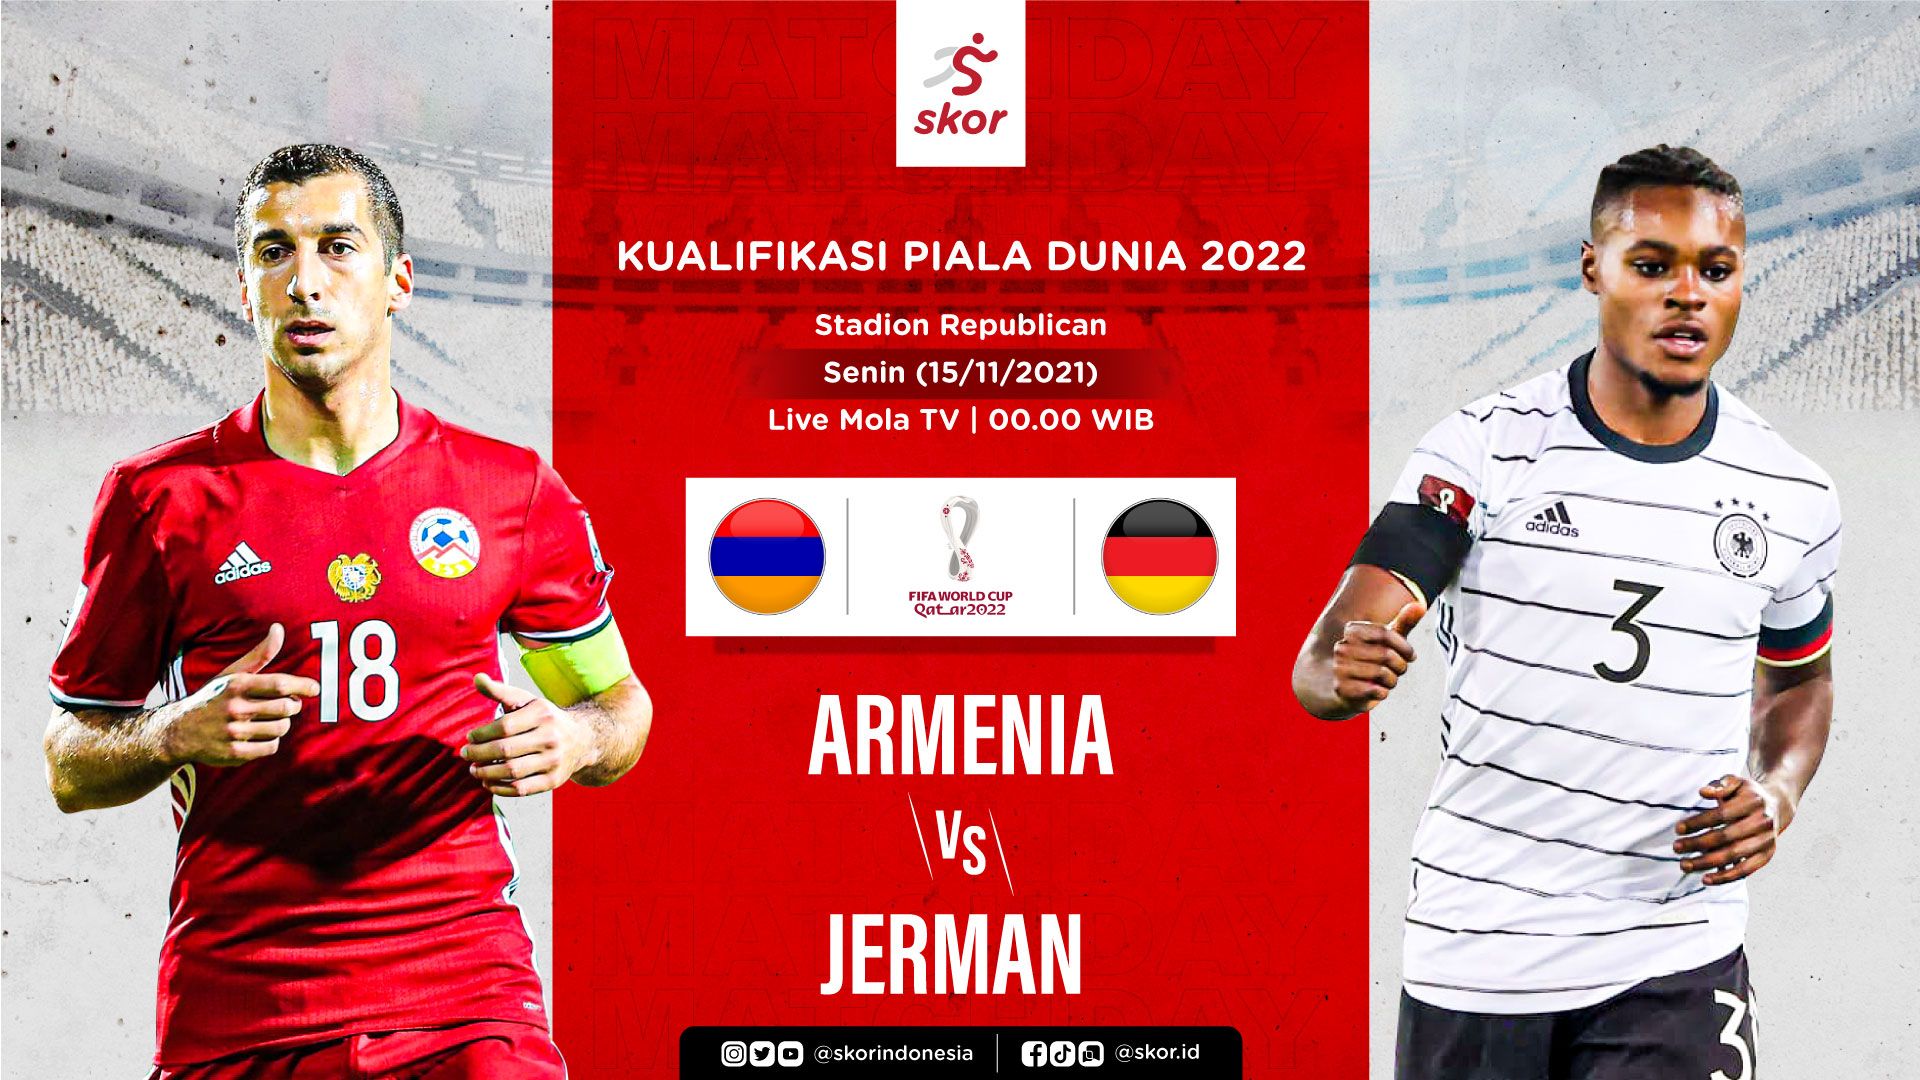 Kualifikasi Piala Dunia 2022, Armenia vs Jerman  